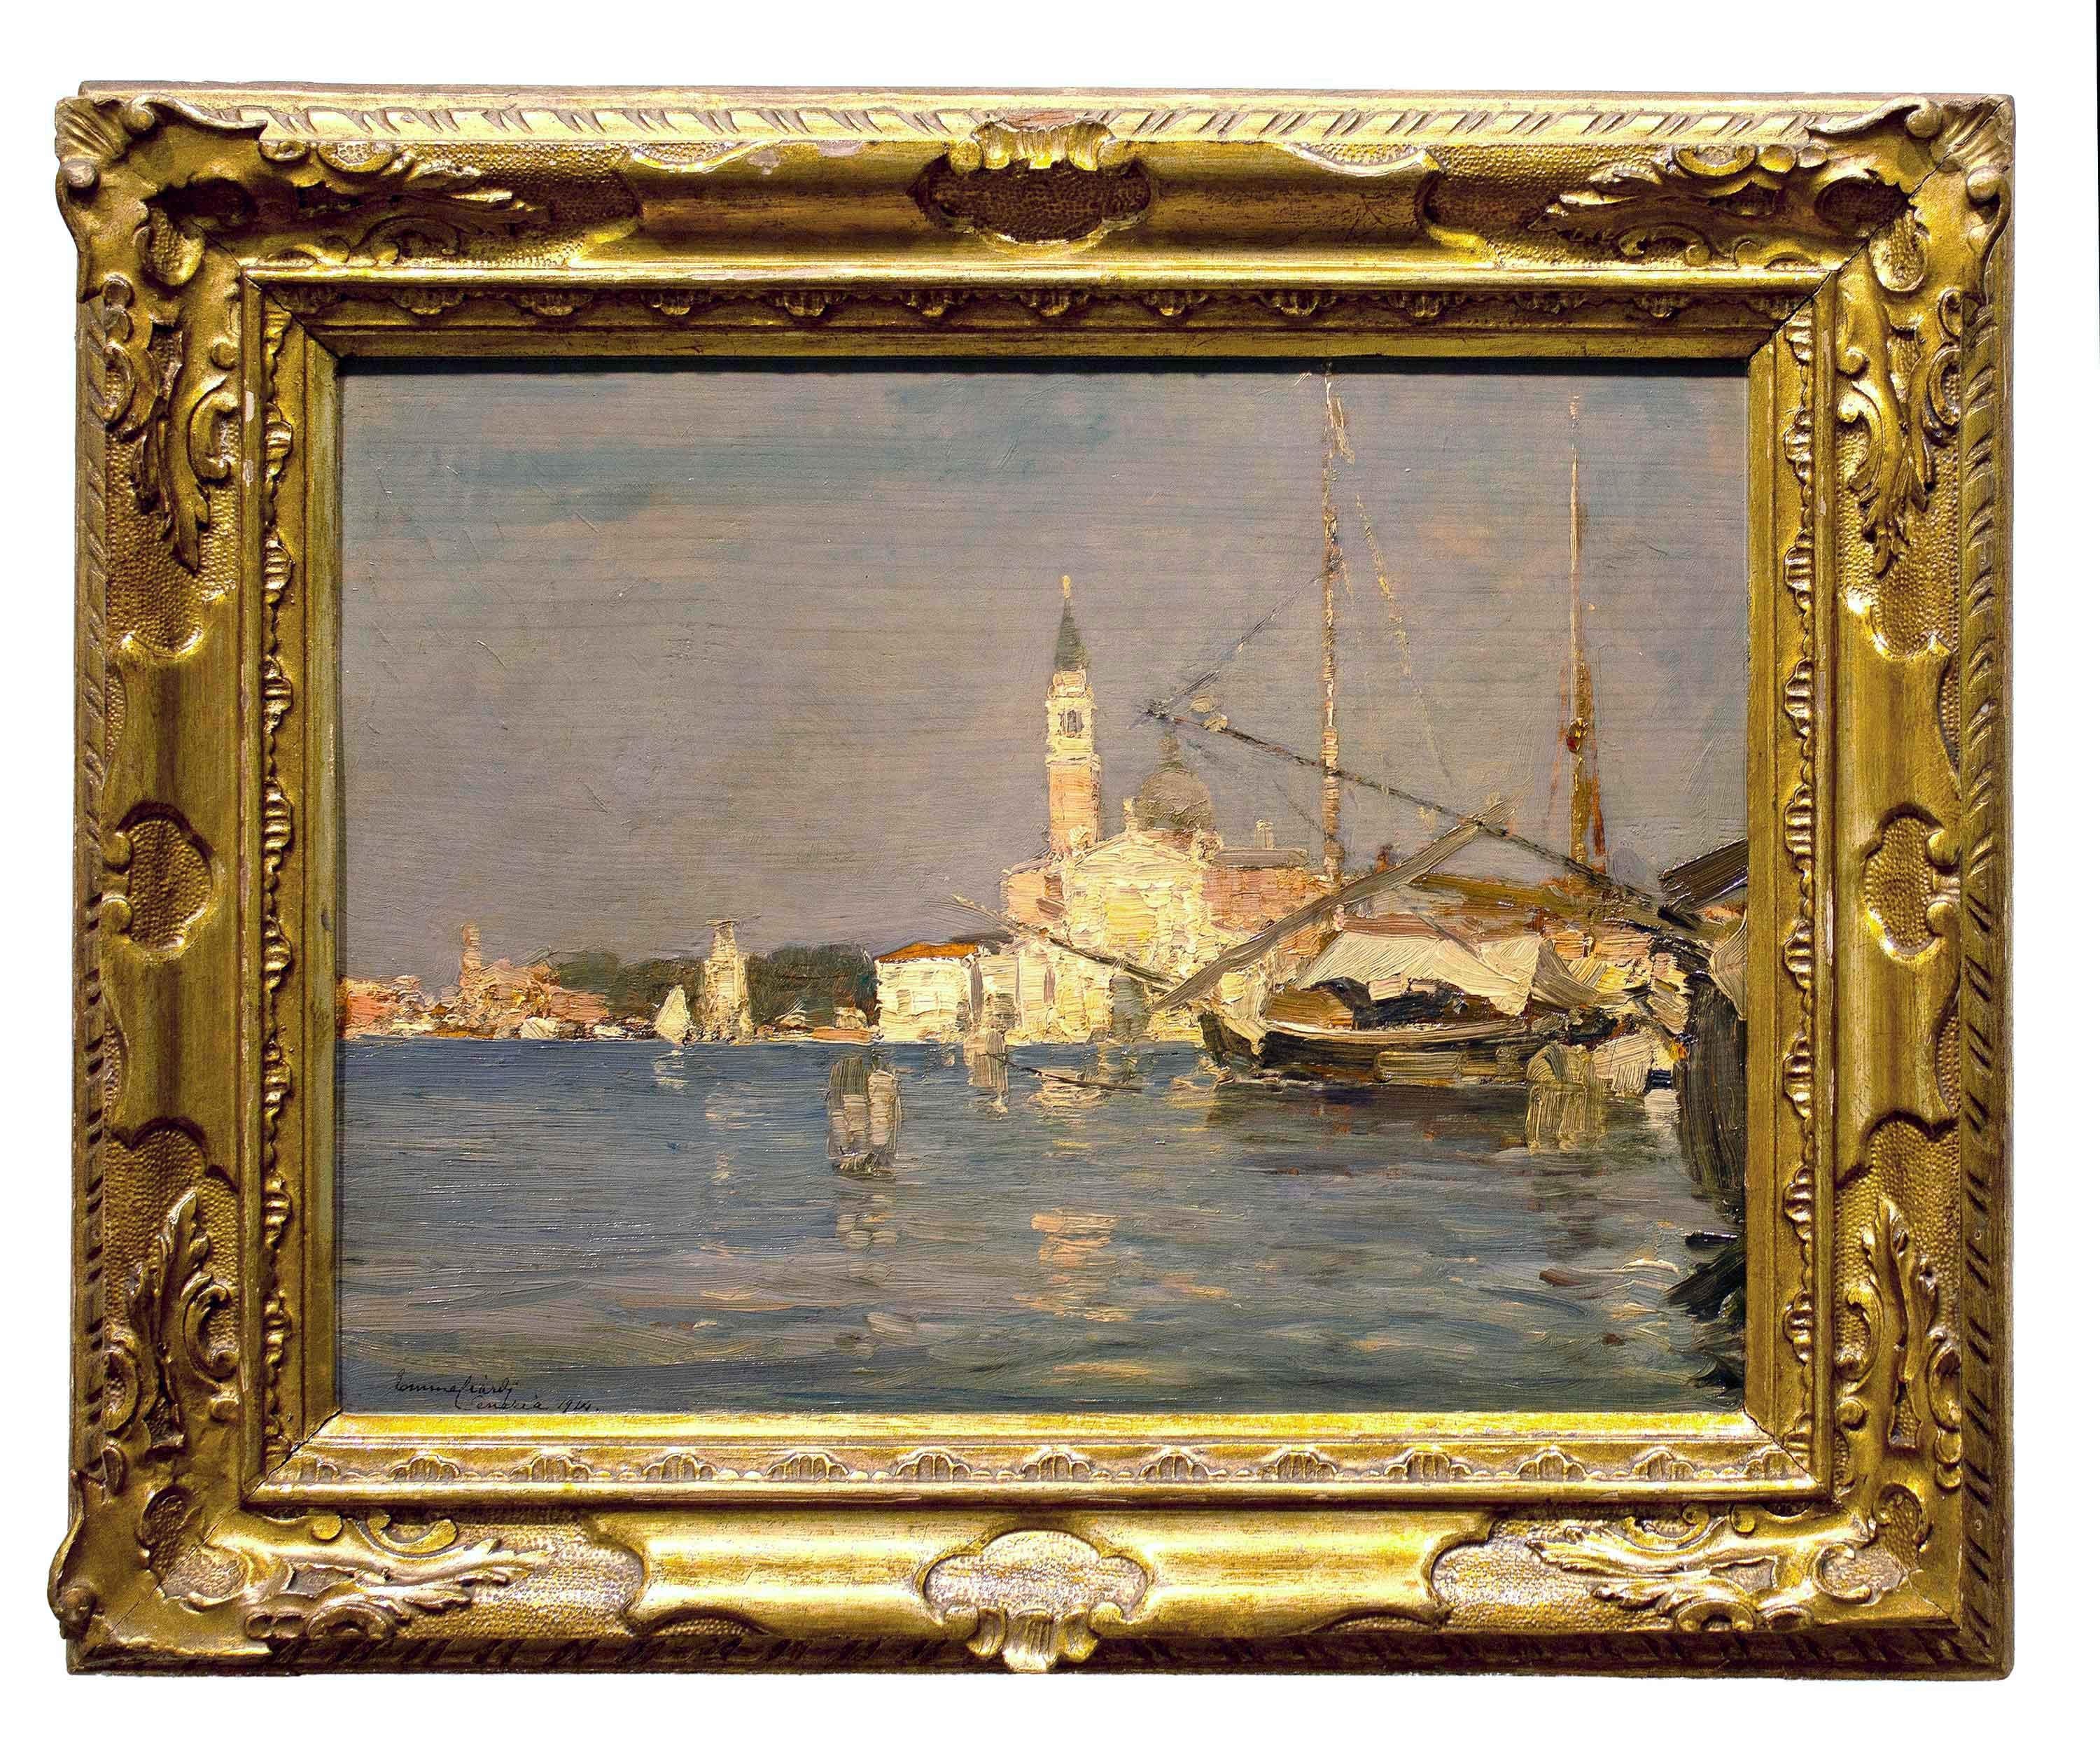 Landscape Painting Emma Ciardi - Impression de Venise (Island of San Giorgio)